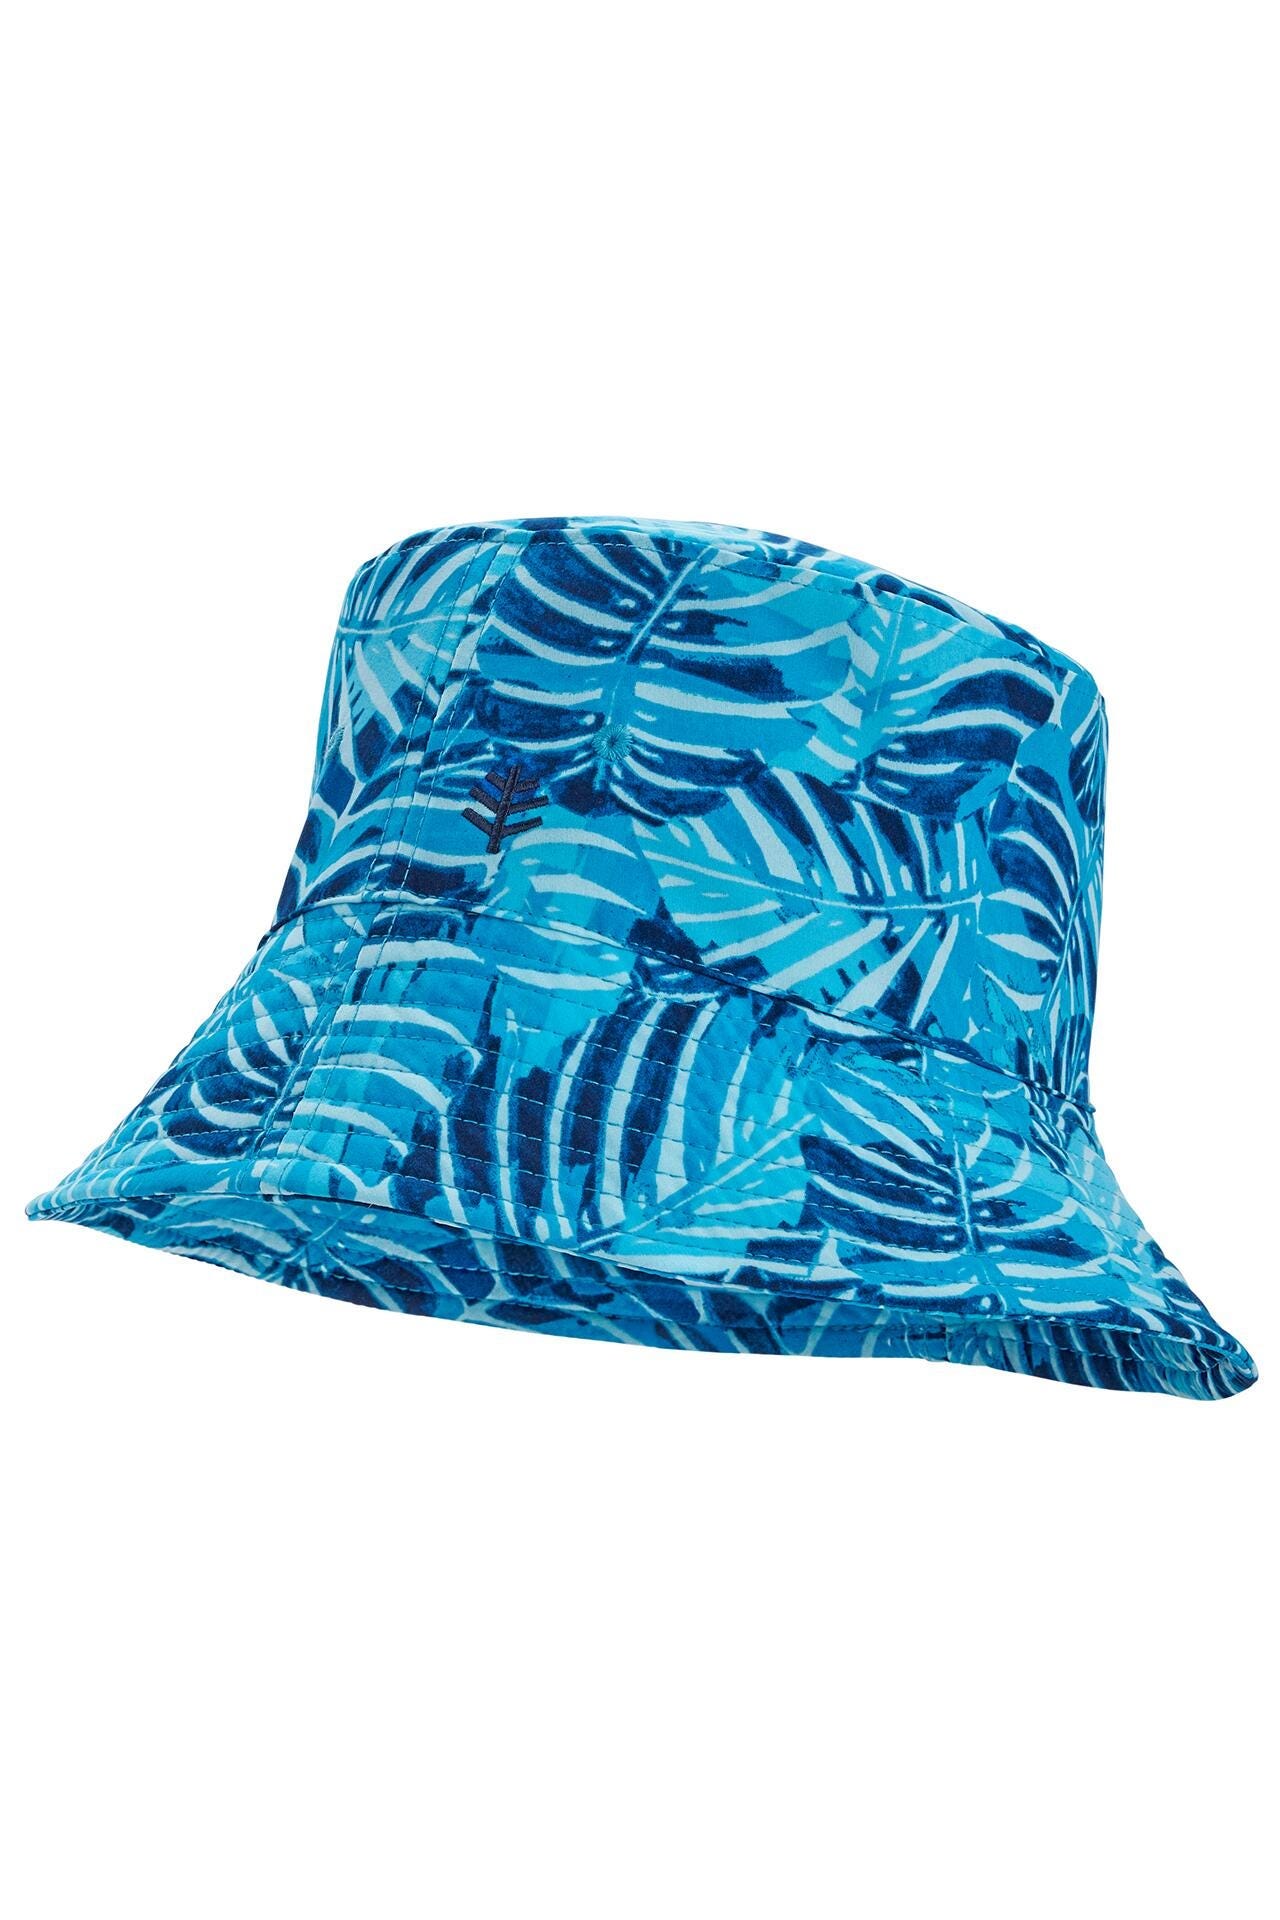 Coolibar Wyatt Swim Printed Bucket Hat UPF 50+, Antigua Blue Oahu Palm / S/M